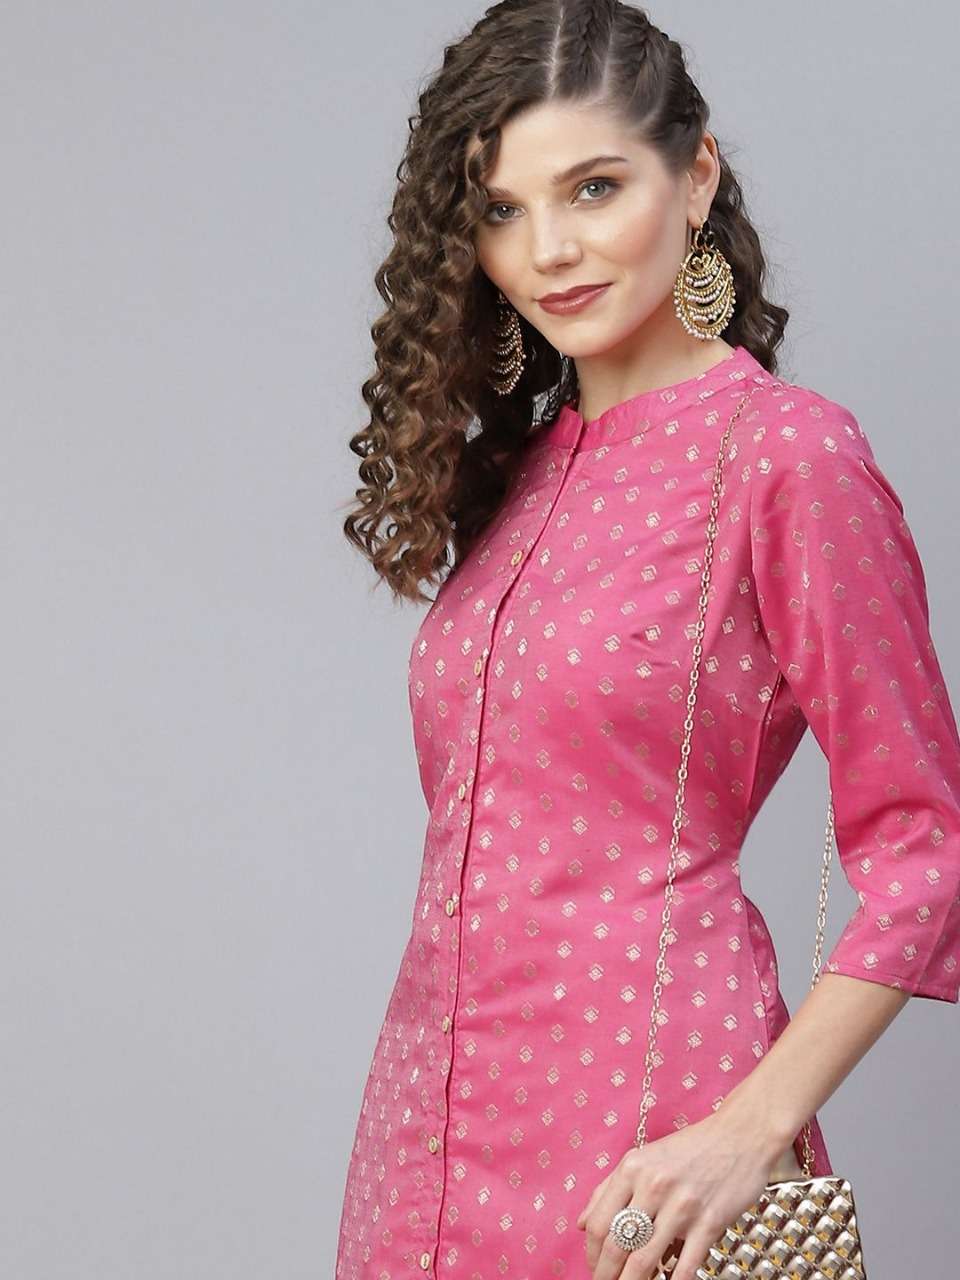 Sabella Fashion Cotton Queen 401 Catalog Ethnic Wear Straight Cut Long Kurtis 